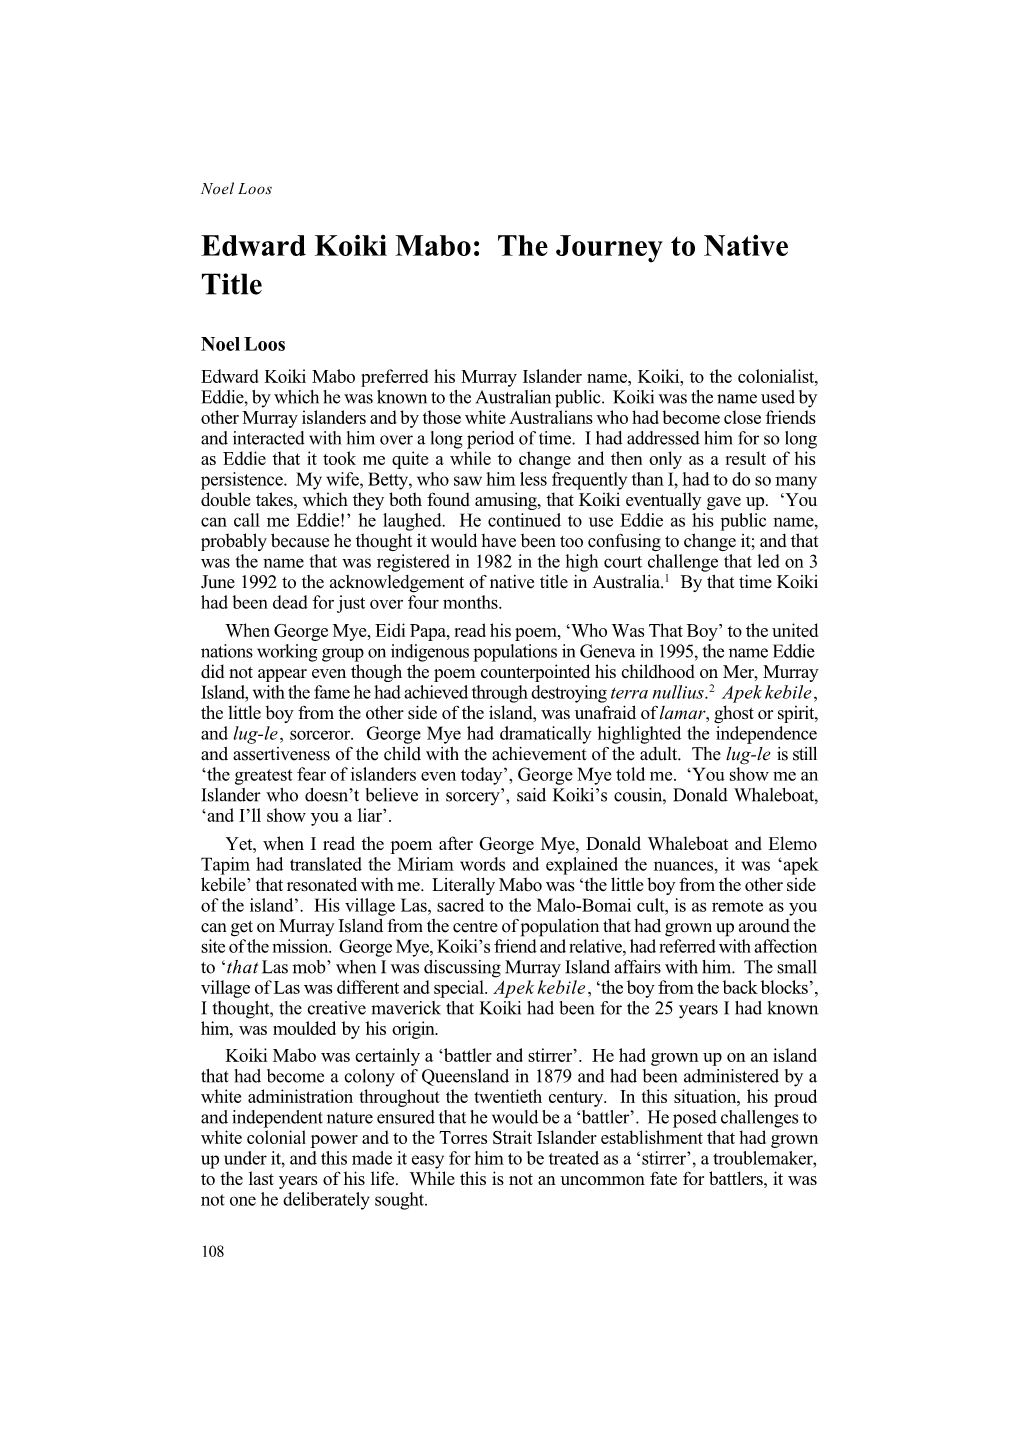 Edward Koiki Mabo: the Journey to Native Title